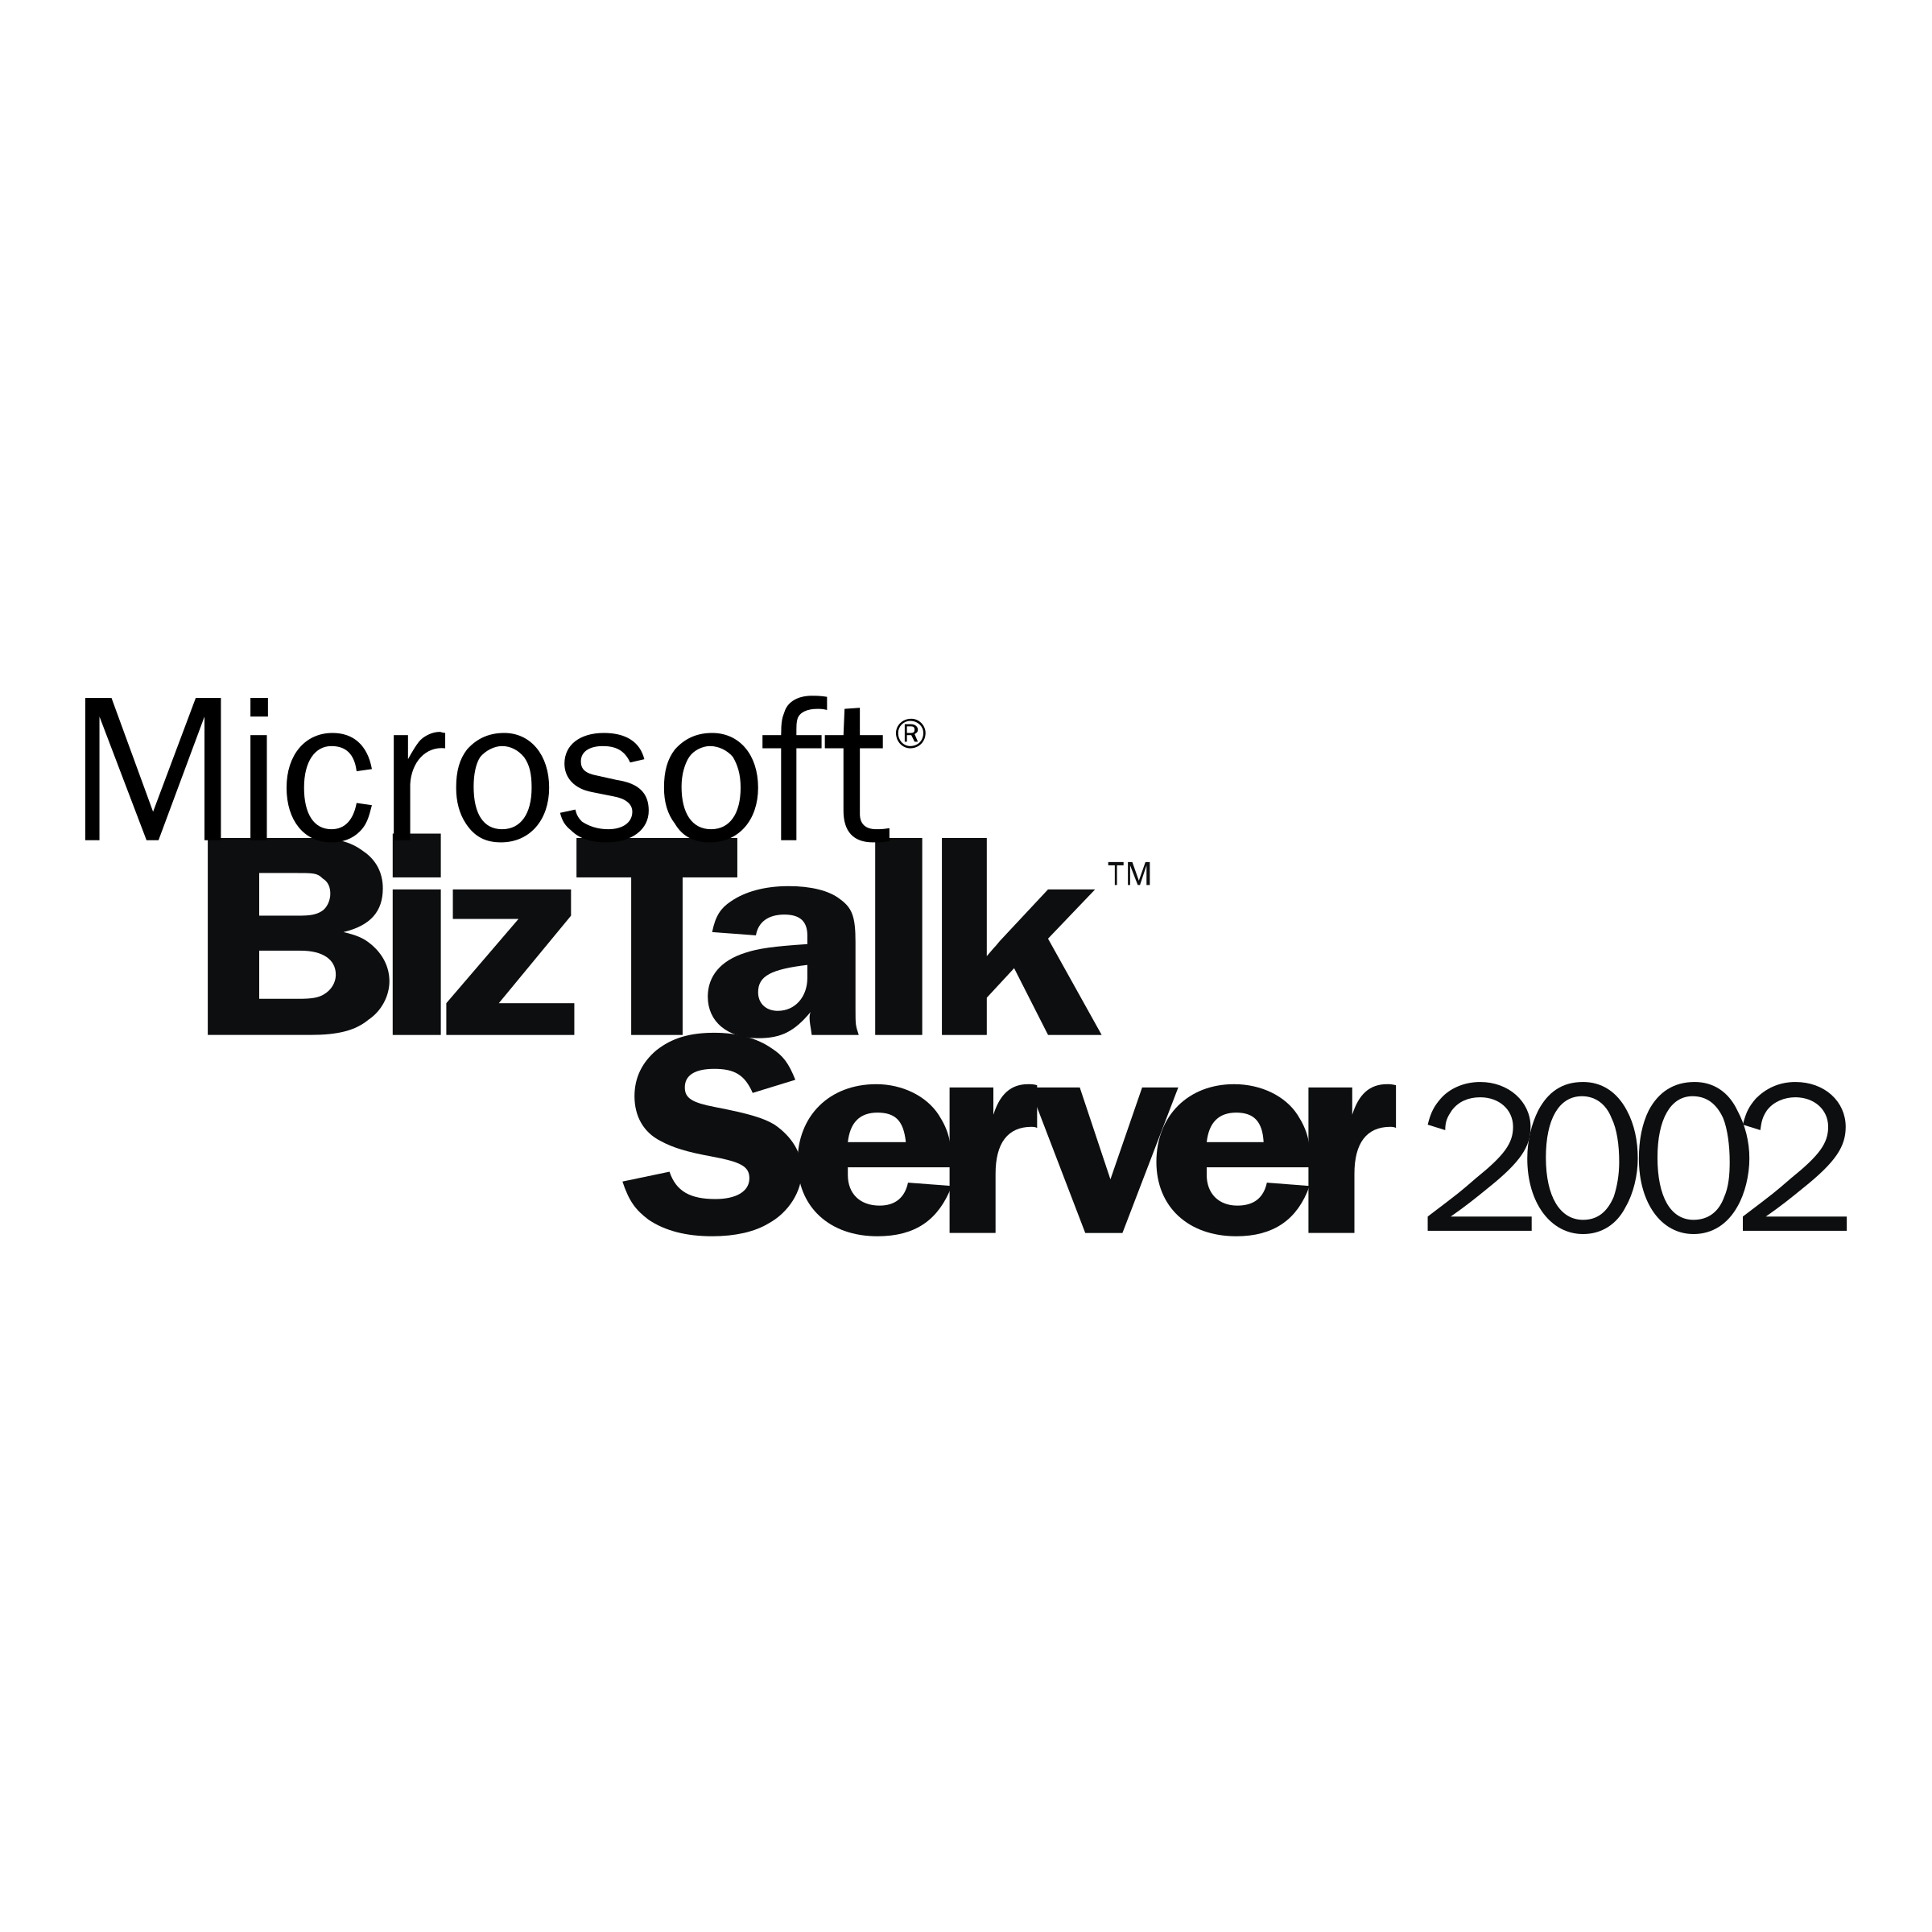 BizTalk Logo - Microsoft BizTalk Server 2002 Logo PNG Transparent & SVG Vector ...